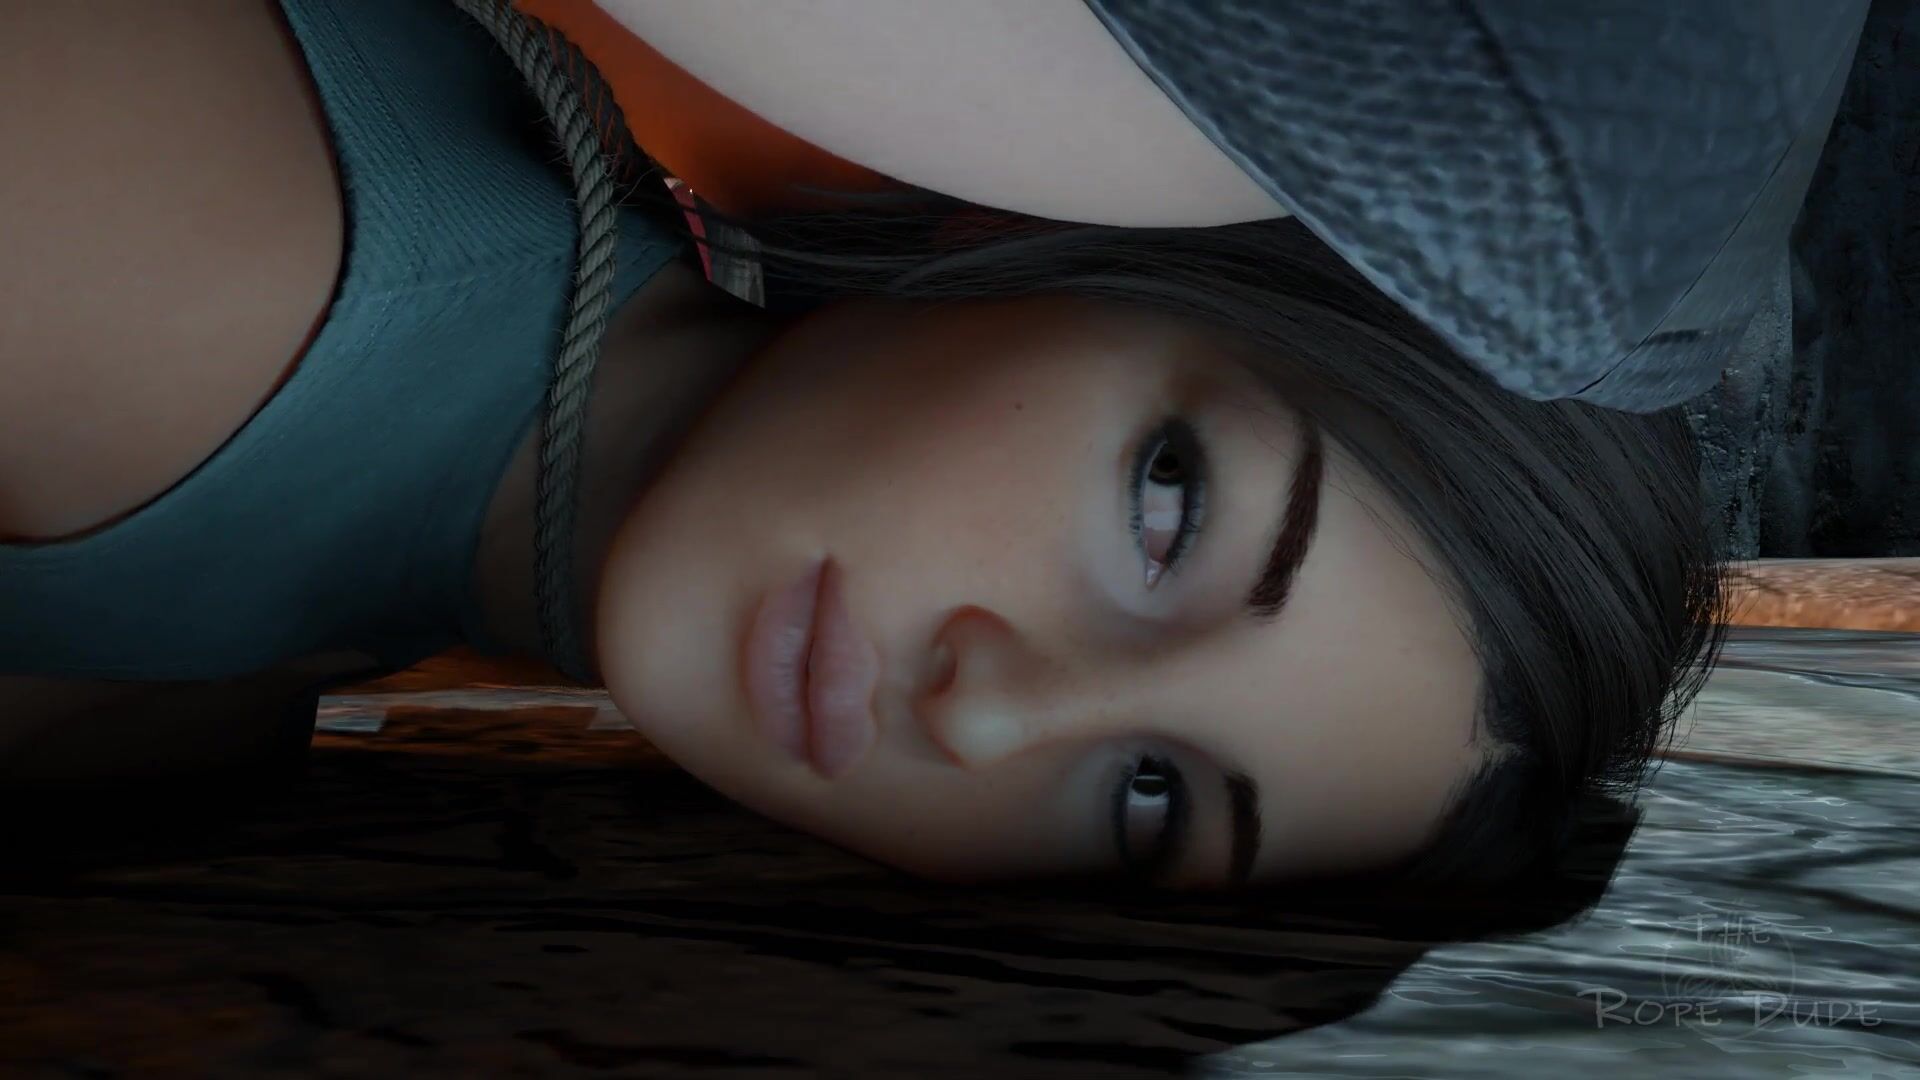 Lara's capture